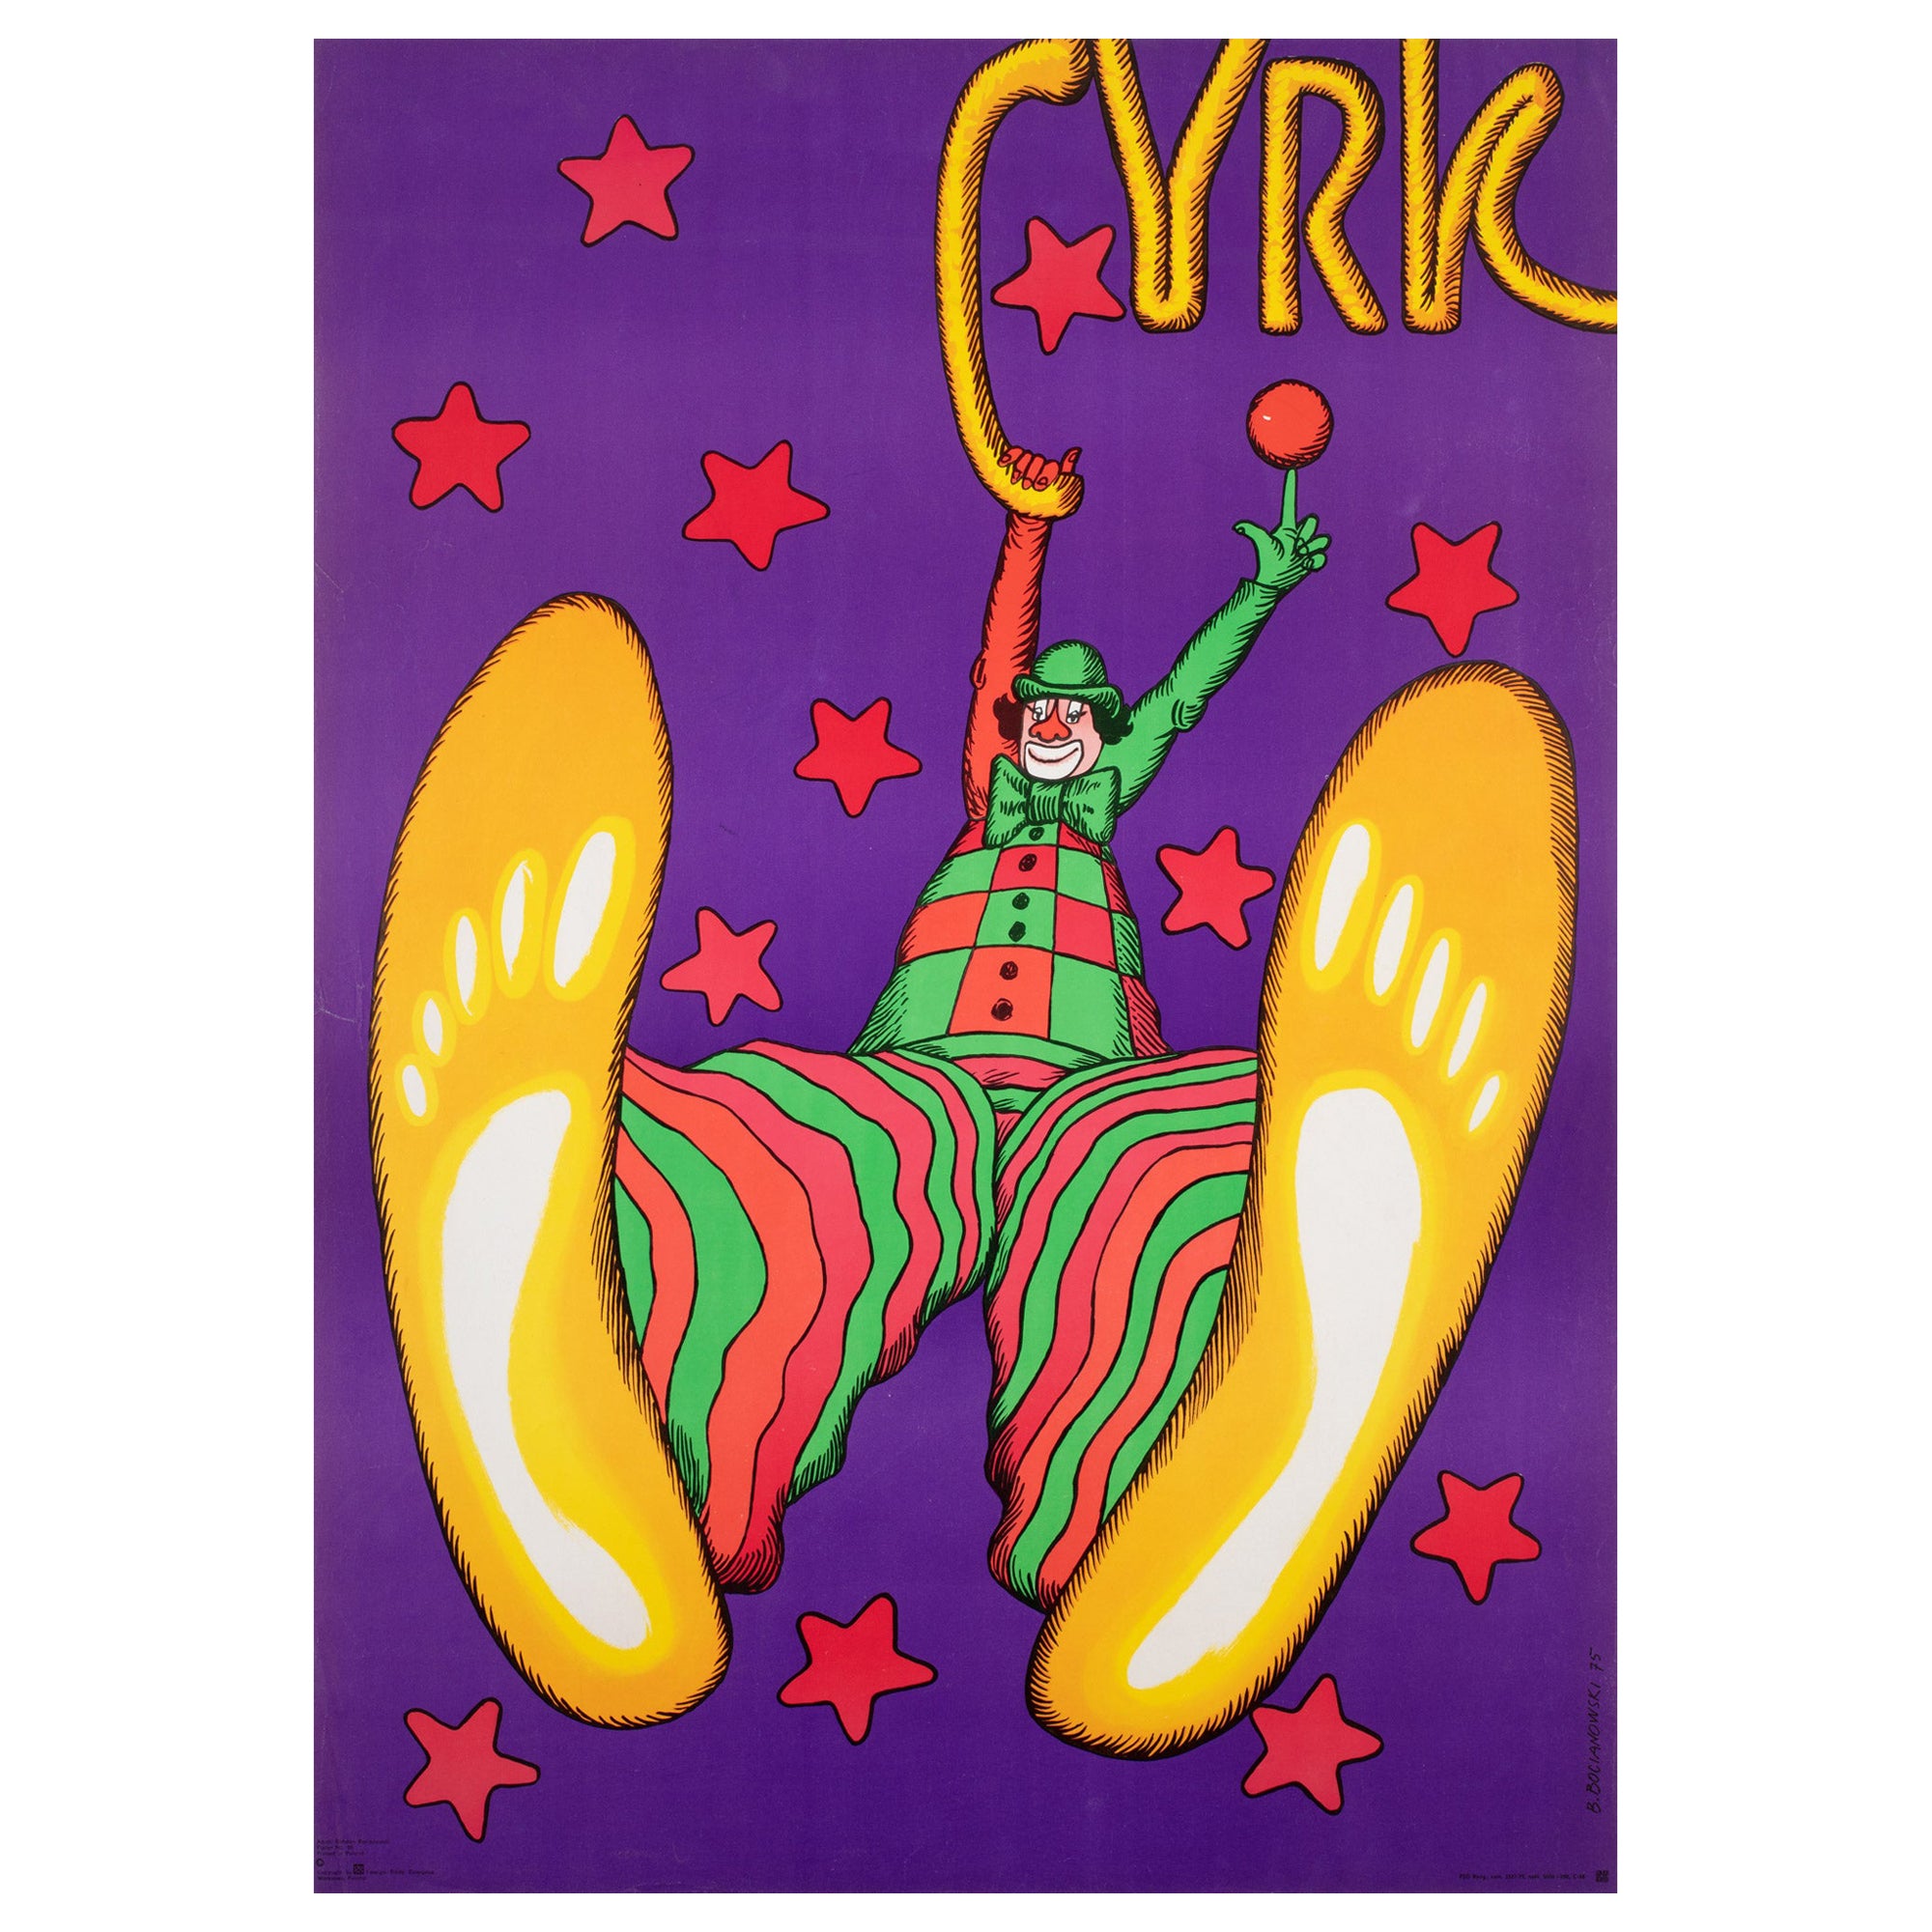 Polnisch, Cyrk, Zirkusplakat, R1979, Vintage, Cyrk Clown Swinging, Bocianowski